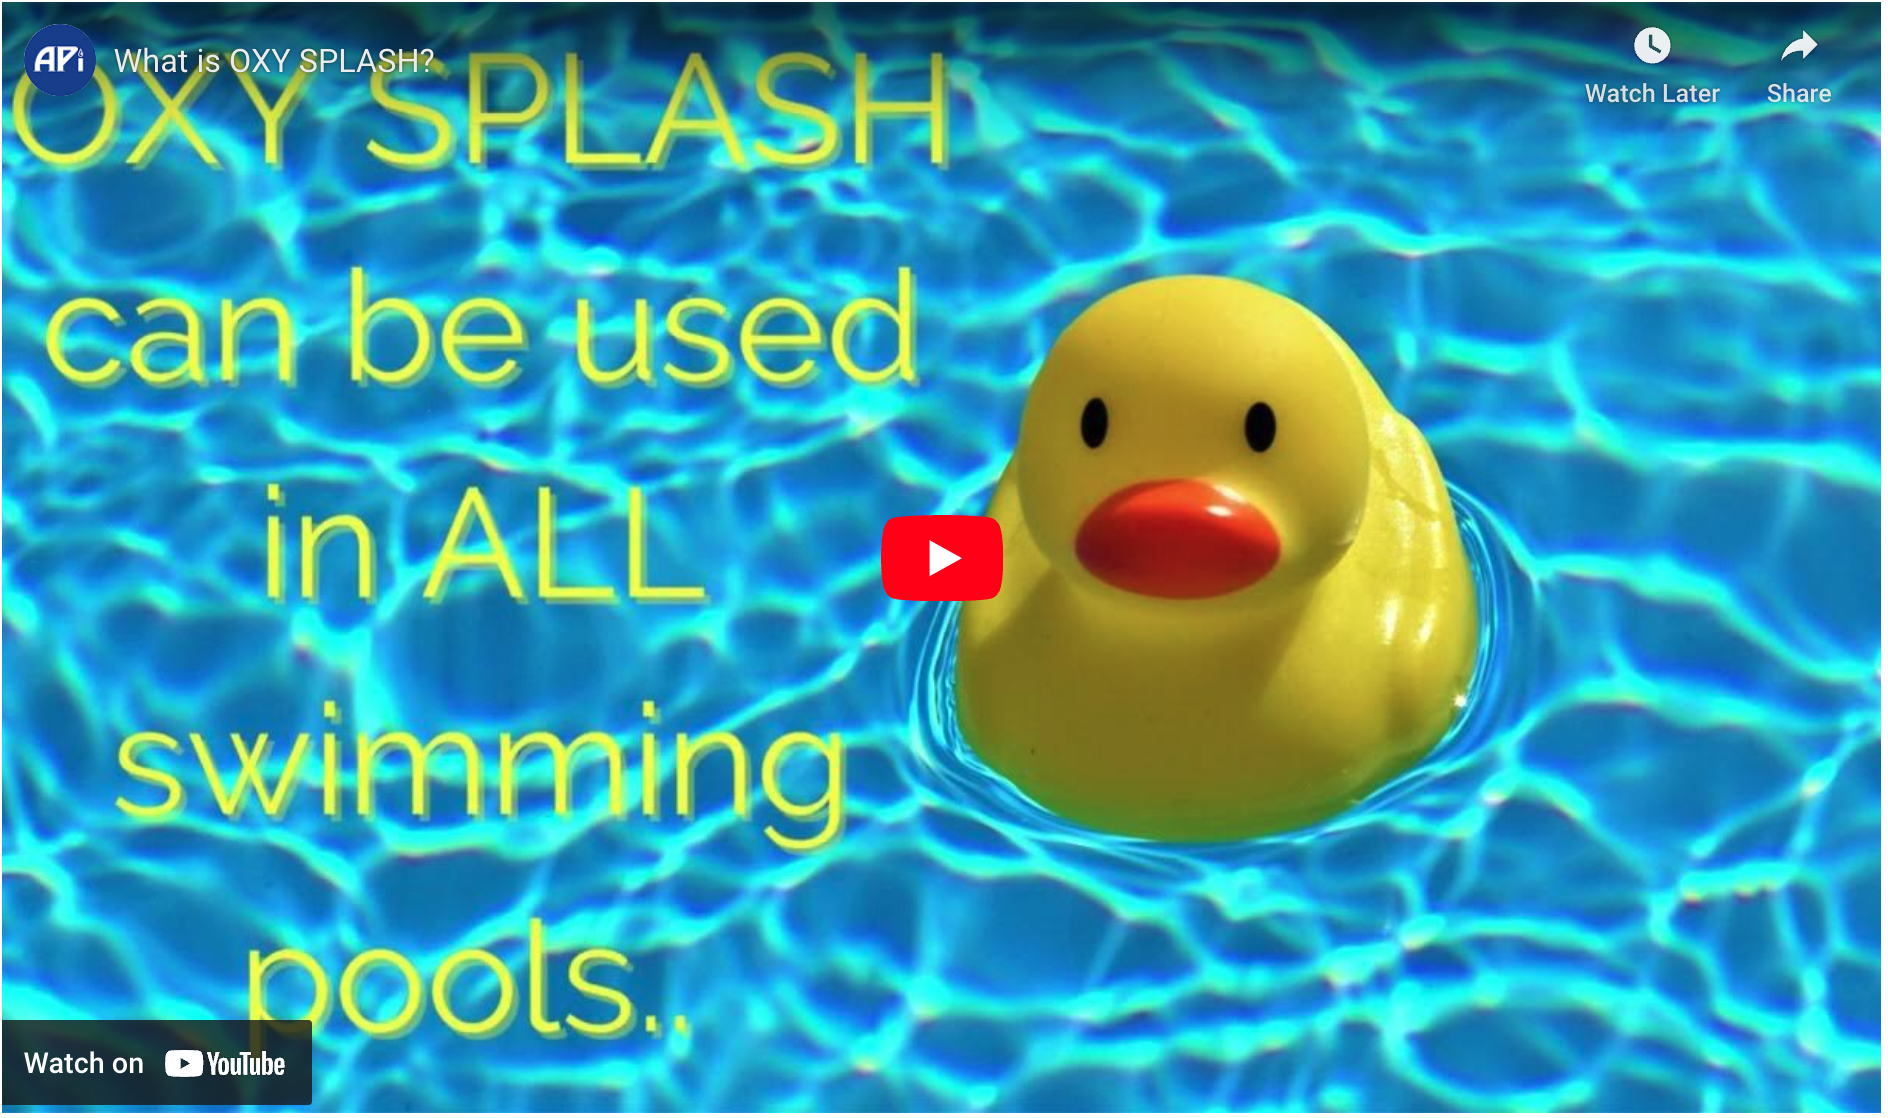 What is OXY Splash